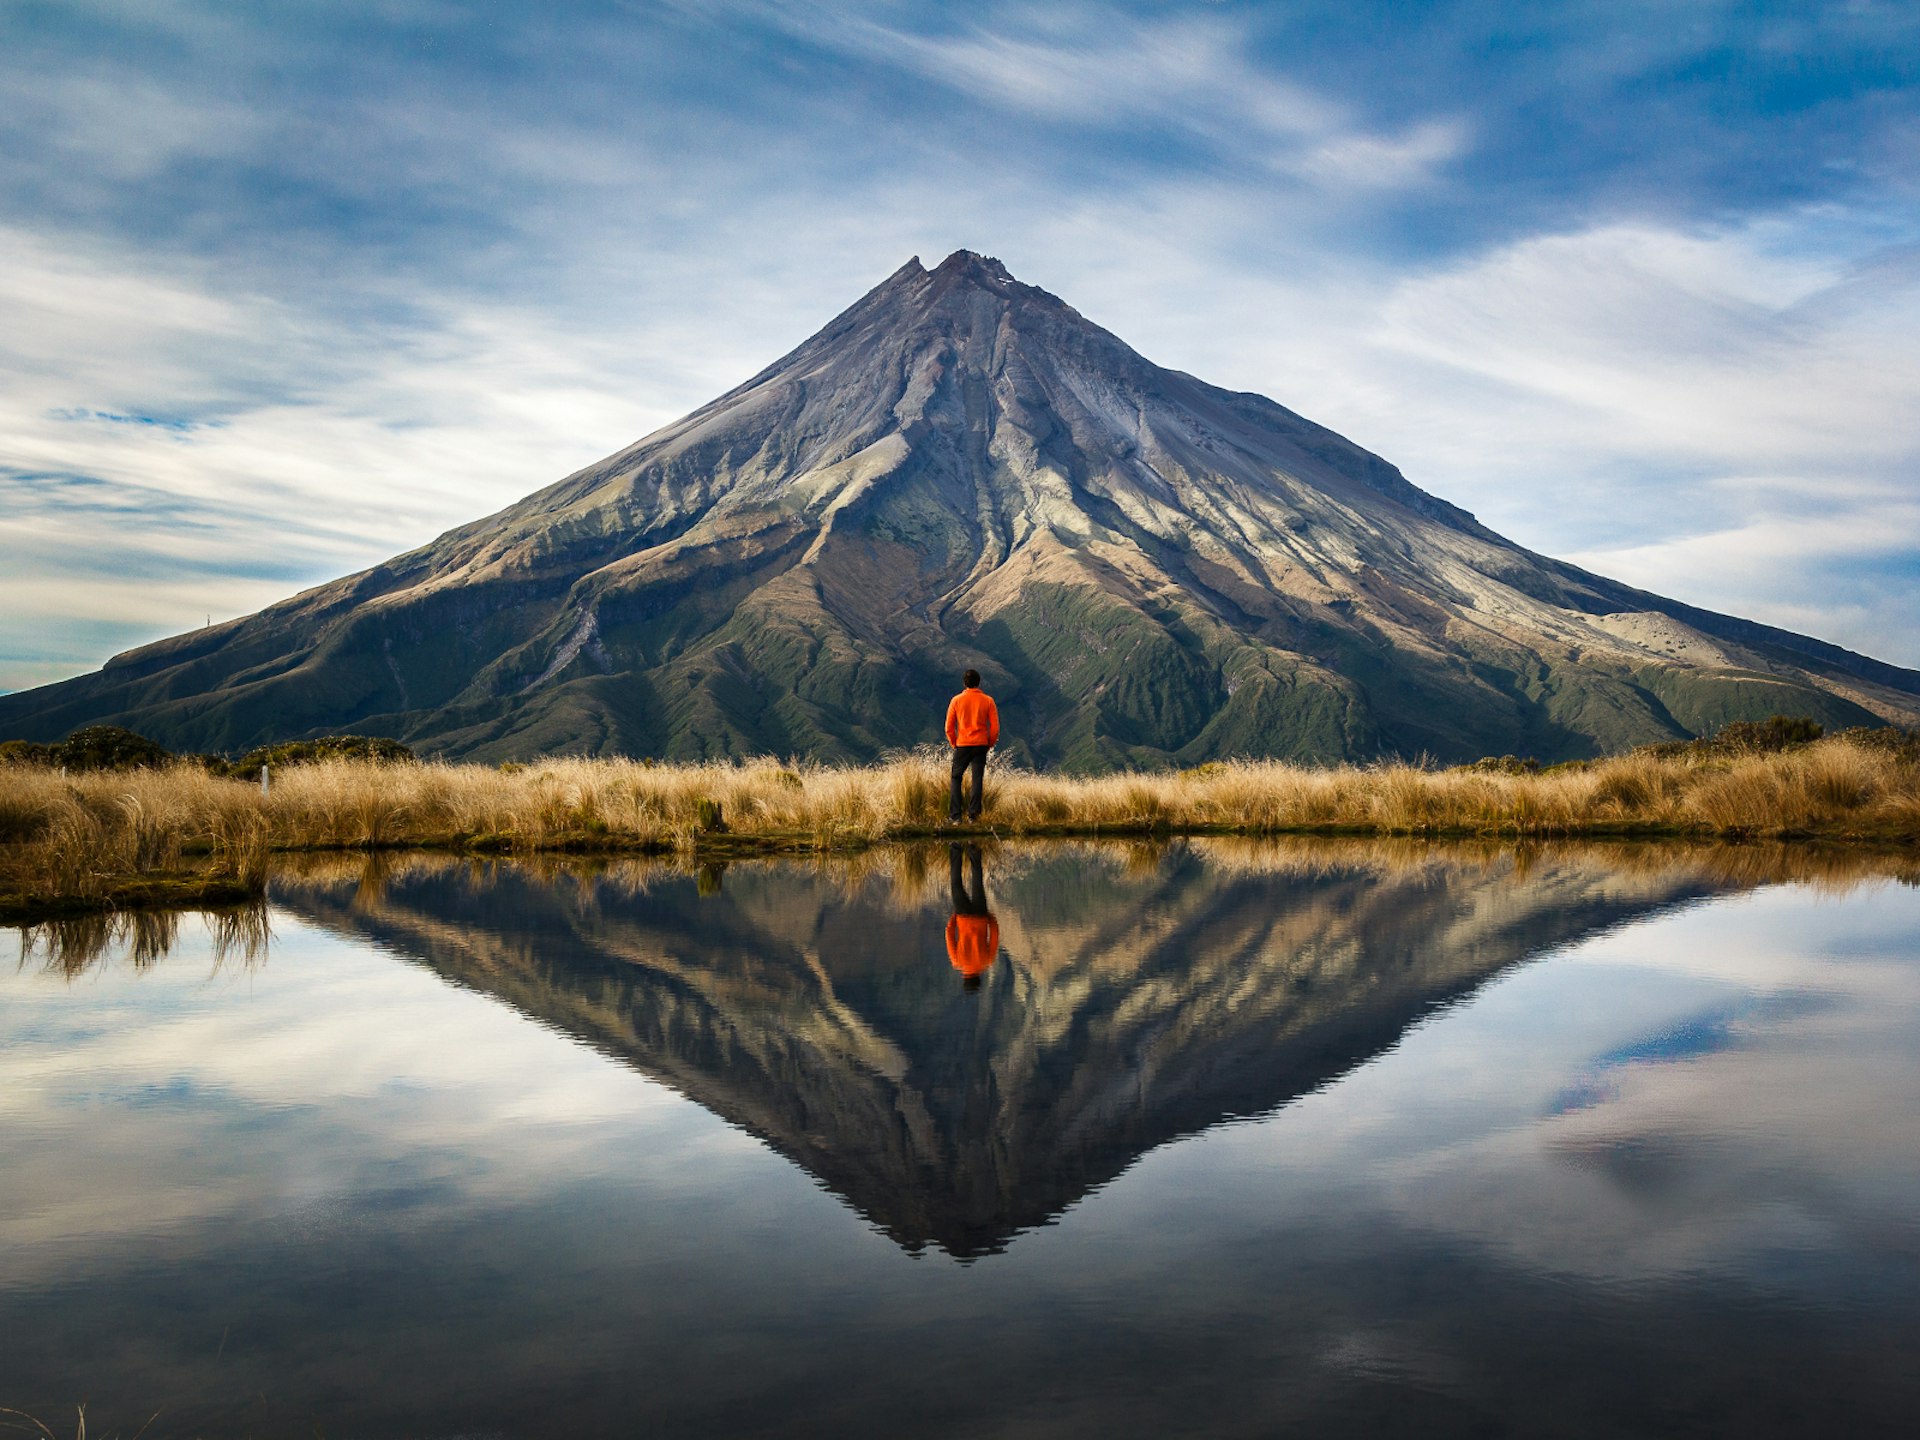 A mountaineer looking at the Taranaki volcano in the north island of New Zealand